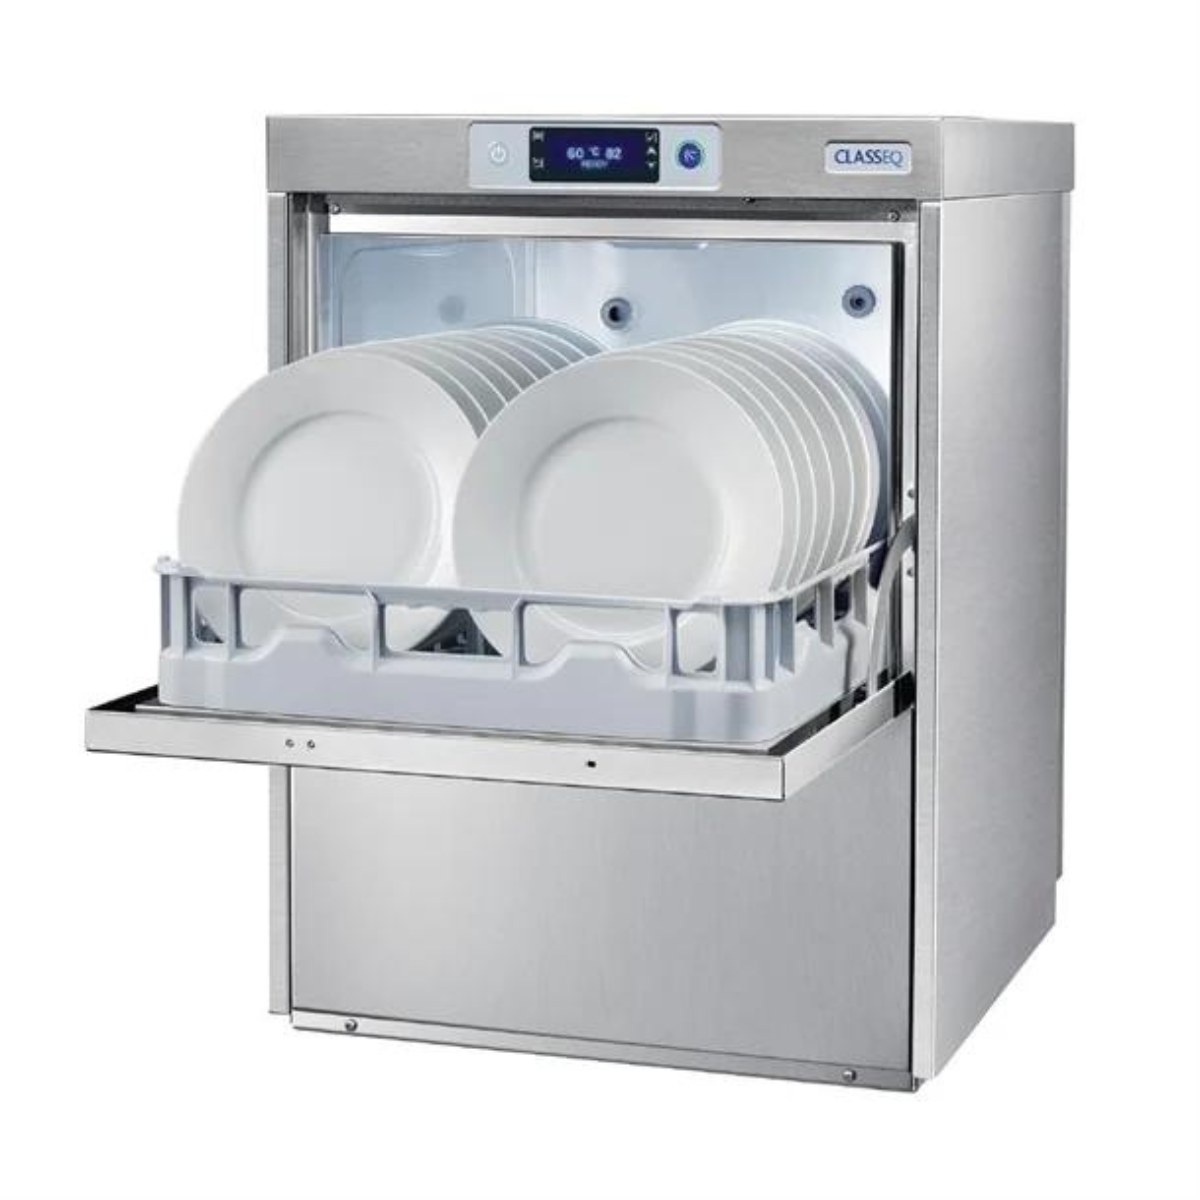 Classeq Undercounter Dishwasher C400 400mm basket up to 40 racks/hr Drain pump